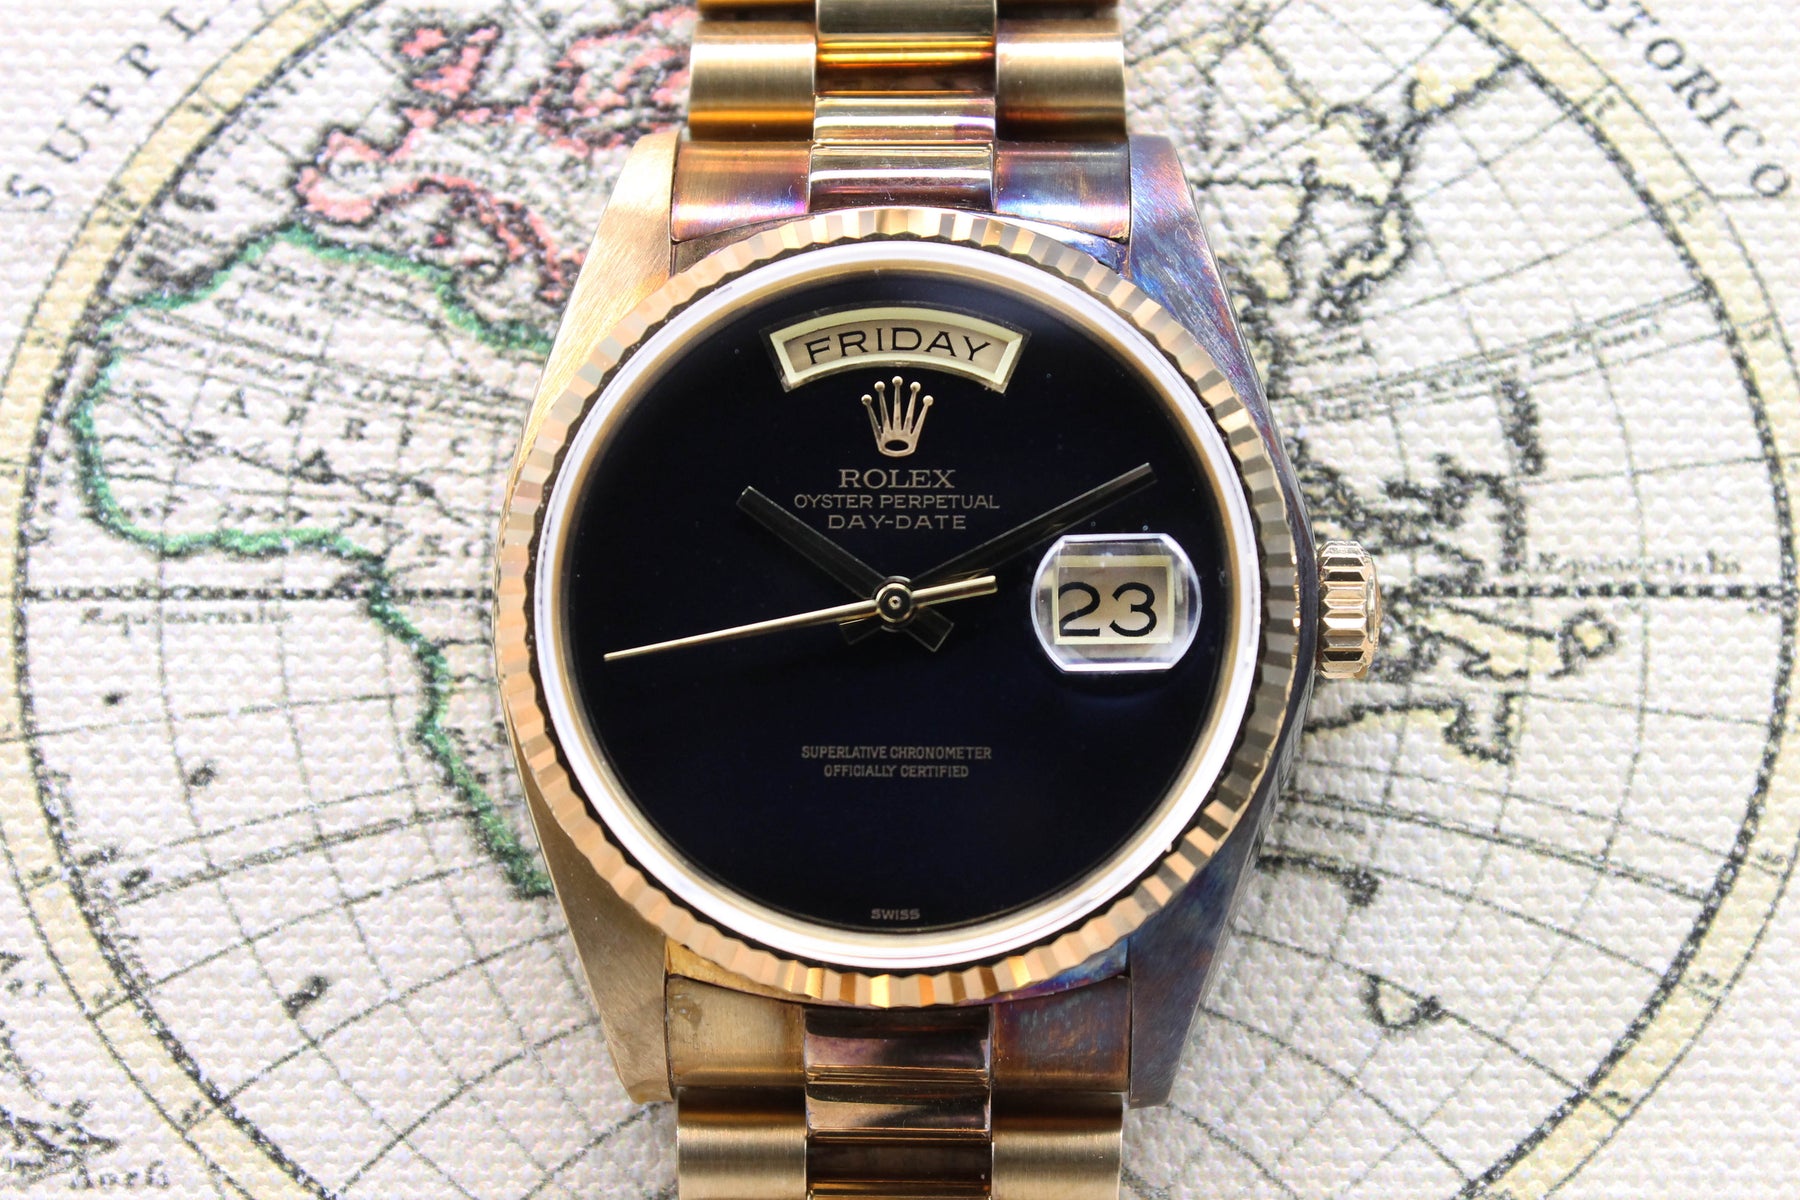 1982 Rolex Day Date Onyx NOS Ref. 18038 - Price on Request